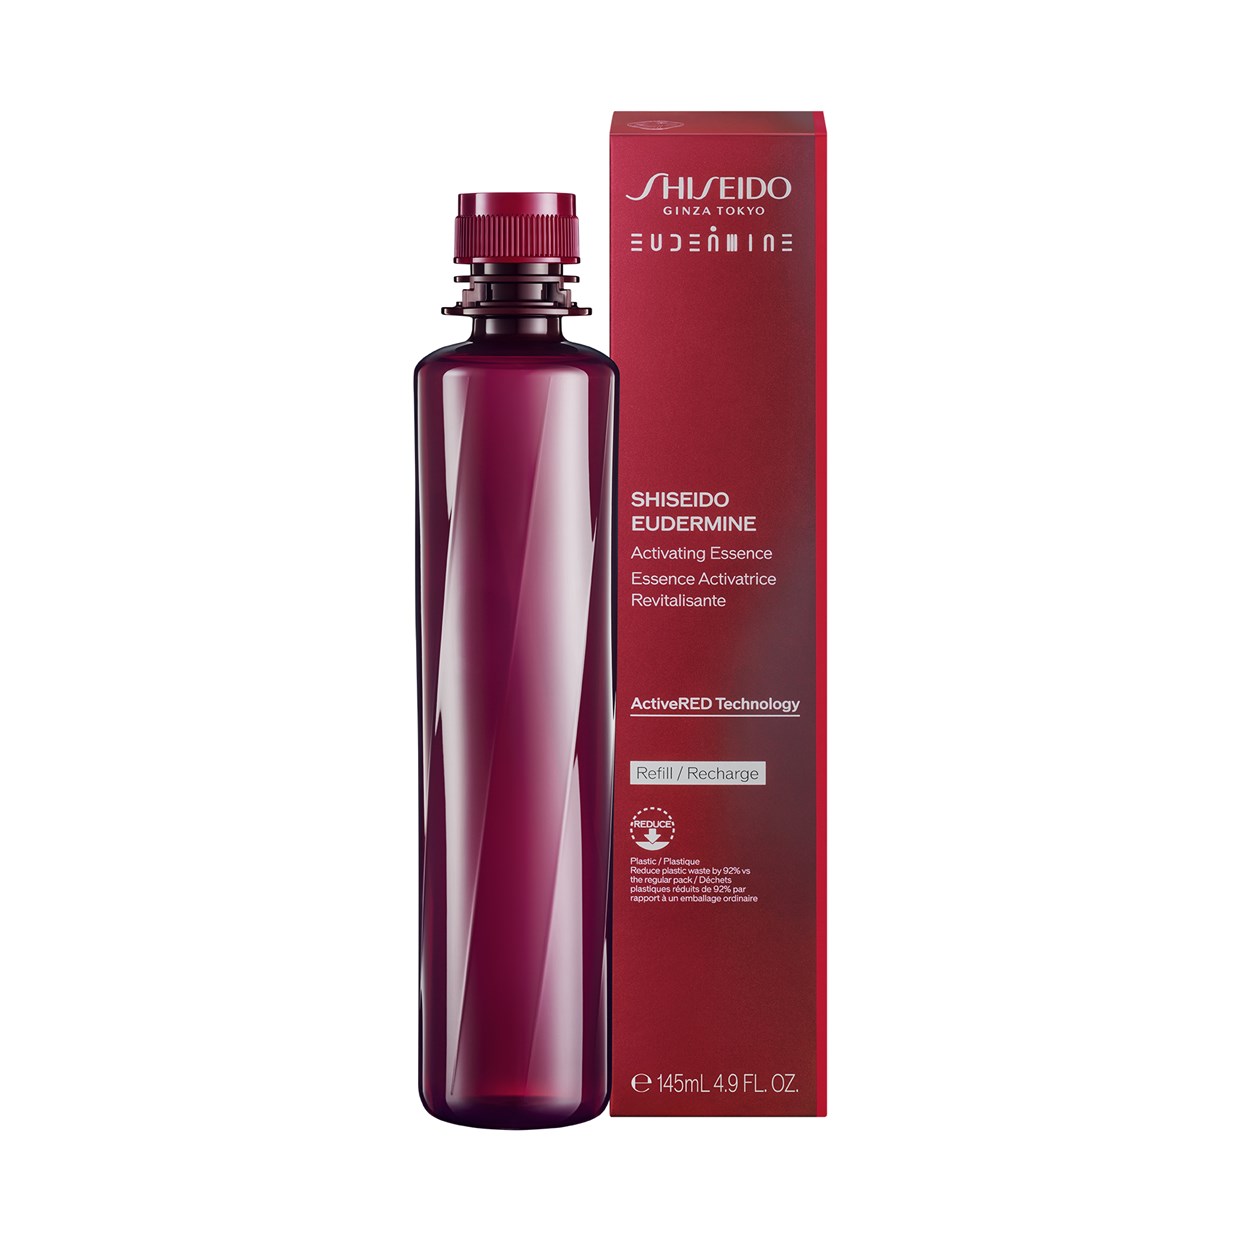 Shiseido Náhradná náplň do pleťového tonika Eudermine (Activating Essence Refill) 145 ml